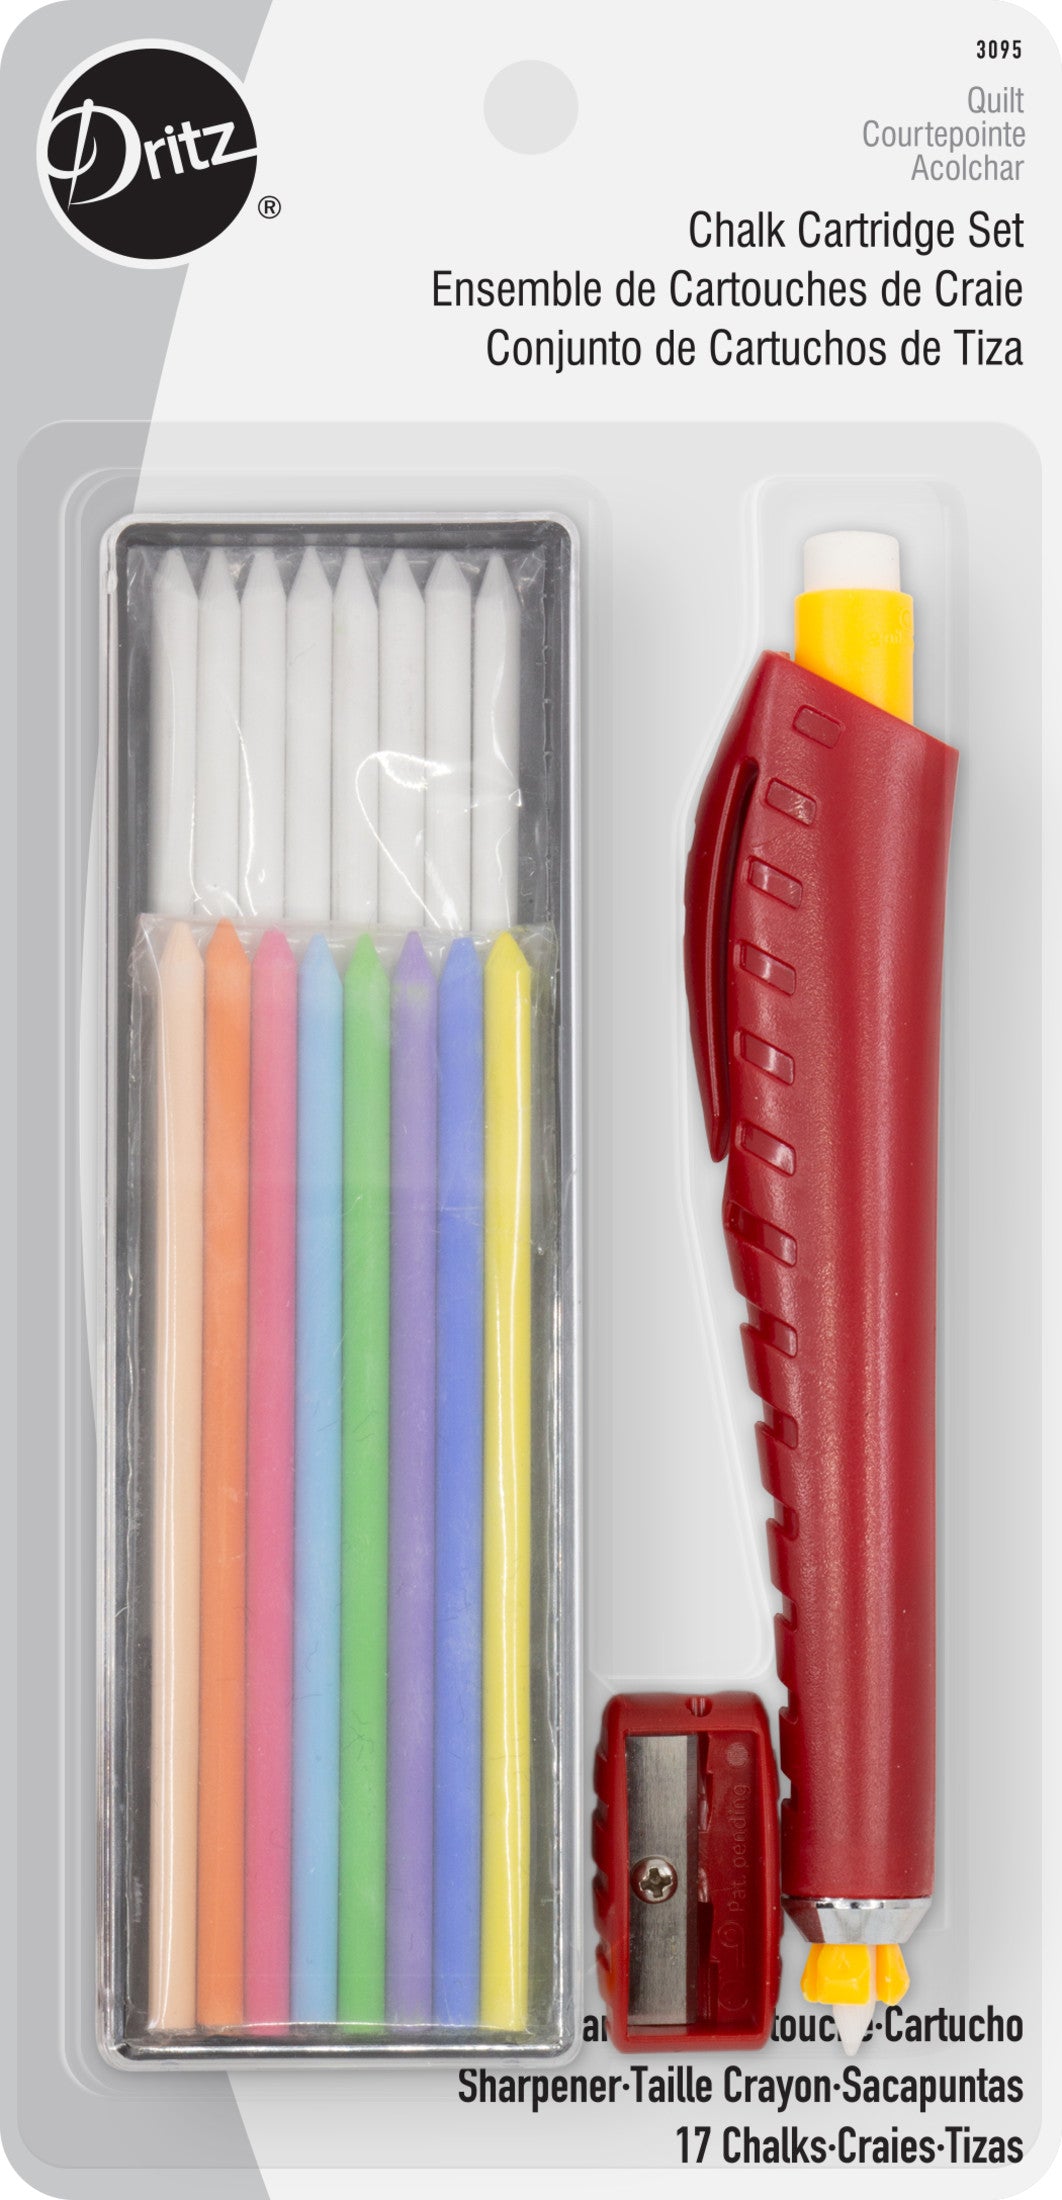  iNee Heat Erase Fabric Marking Pens with 10 Free